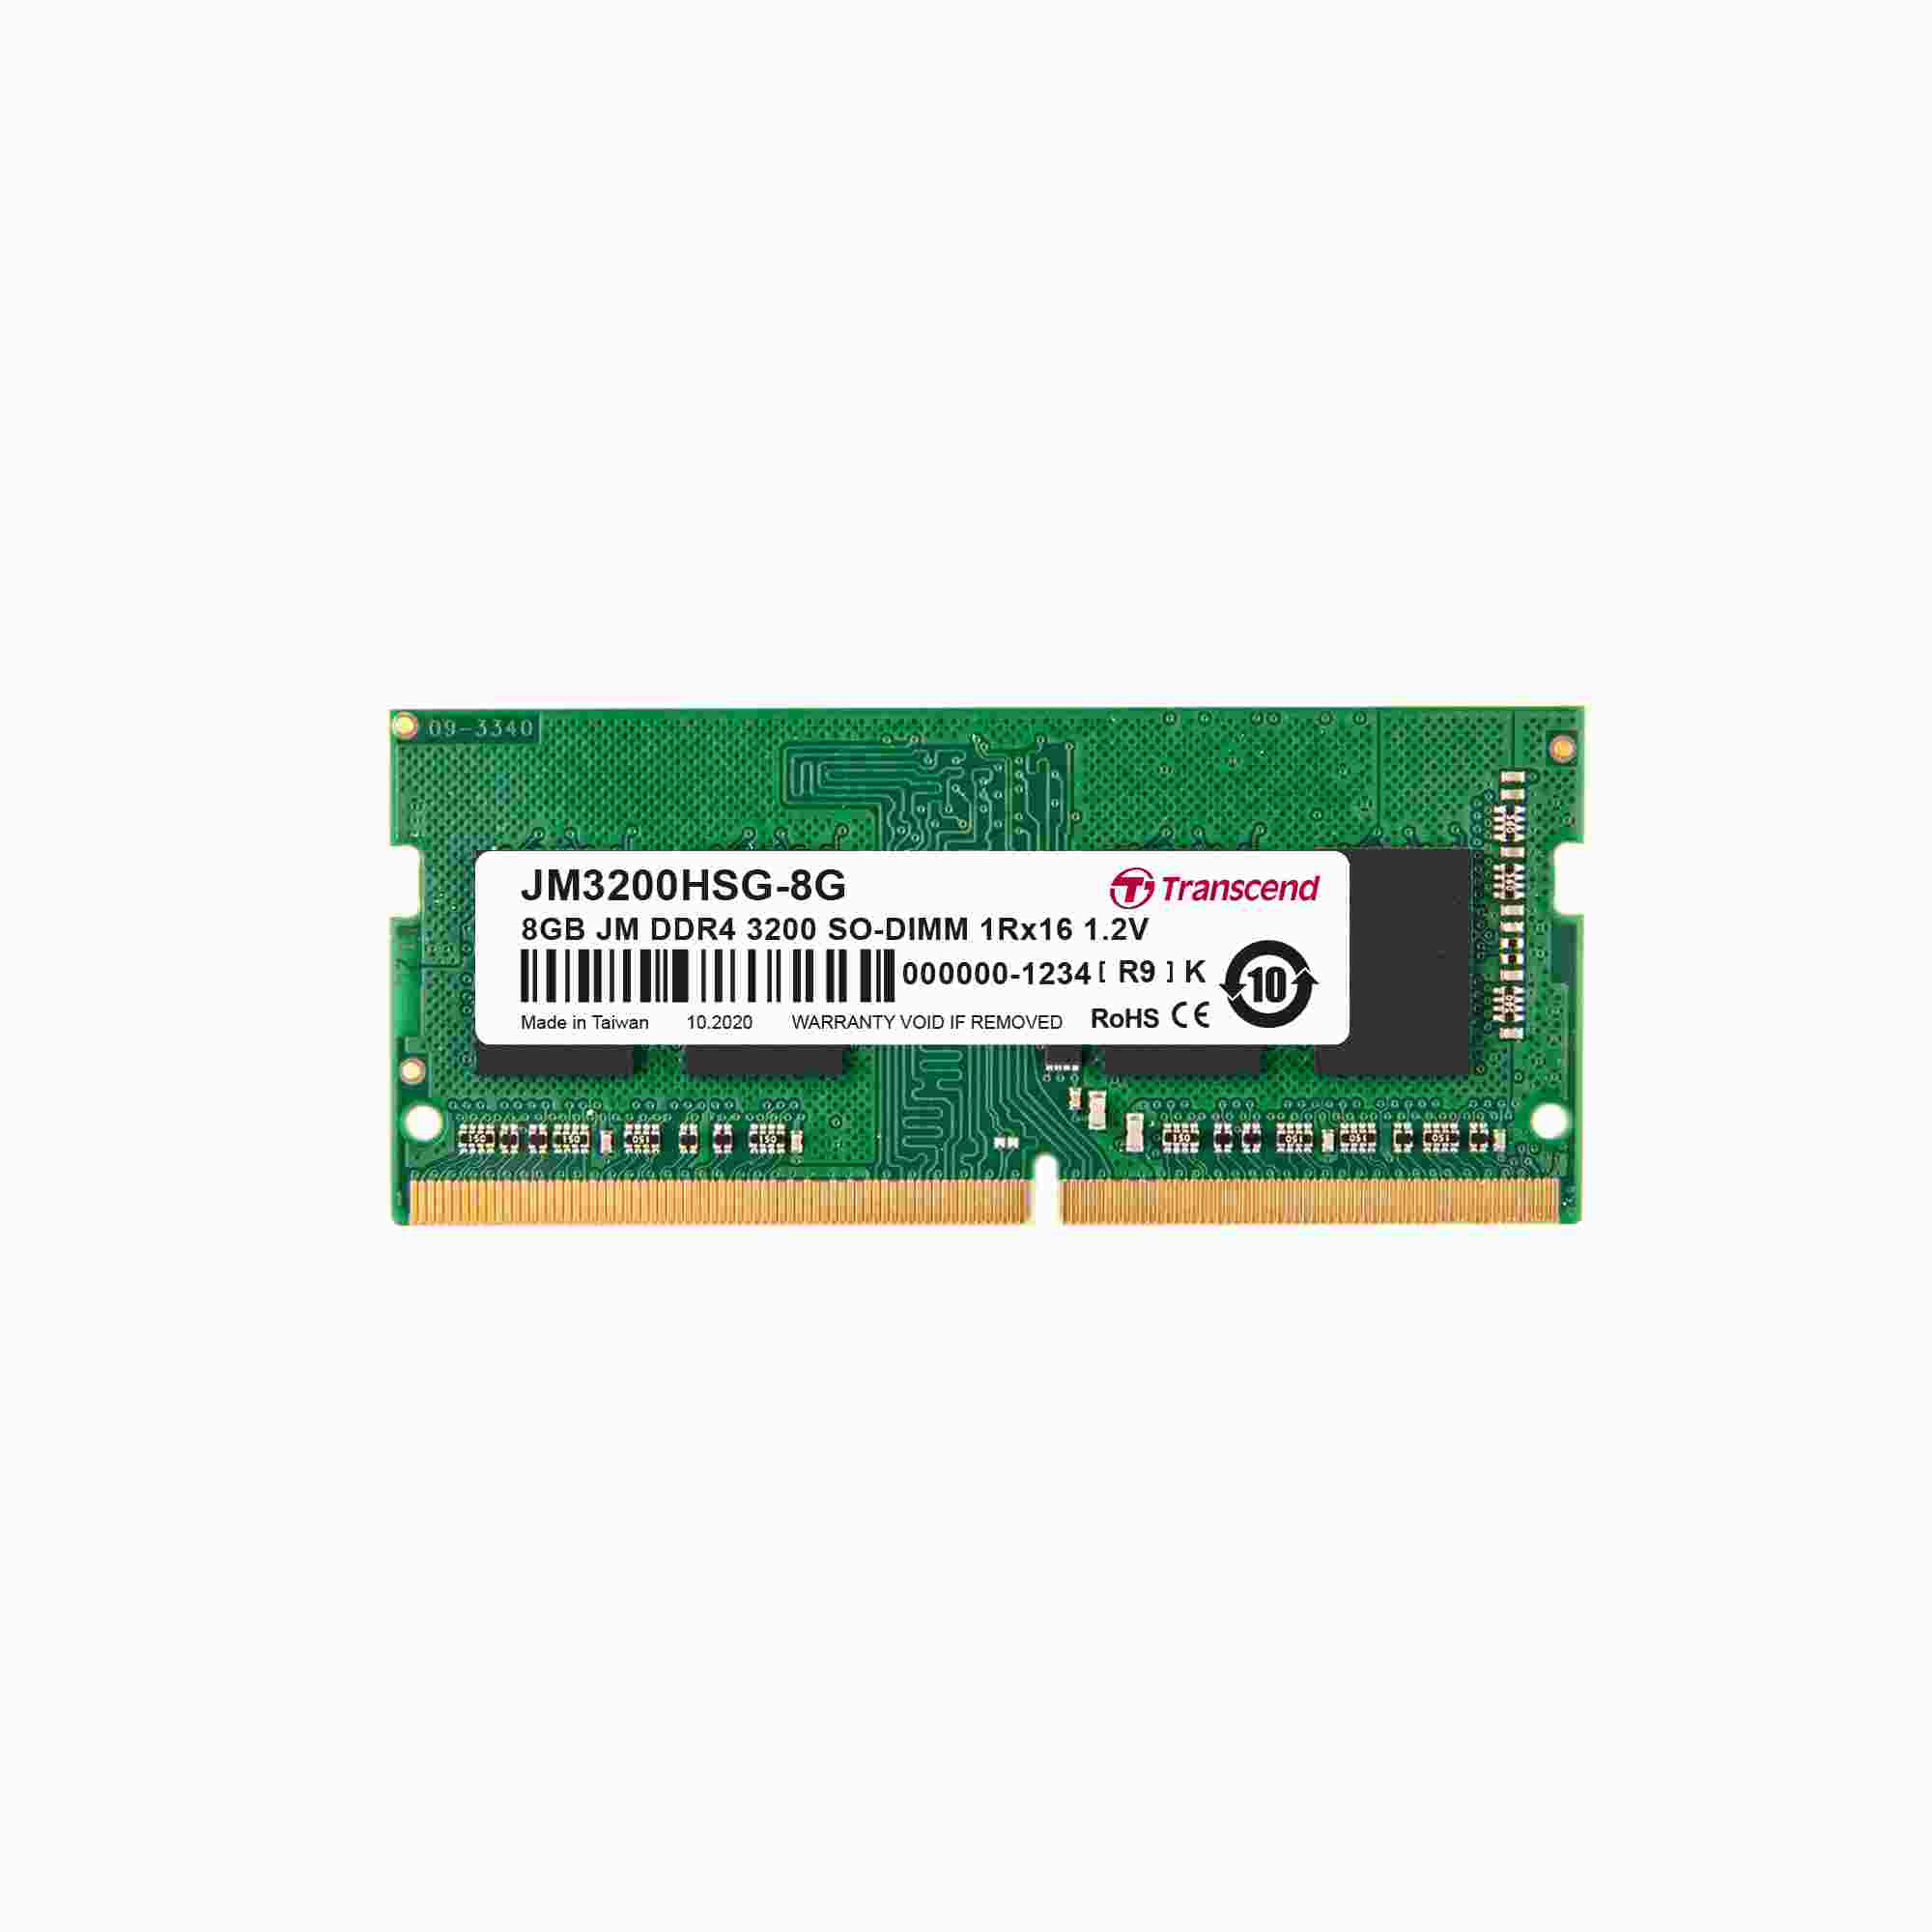 SODIMM DDR4 8GB 3200MHz TRANSCEND 1Rx16 1Gx16 CL22 1.2V0 